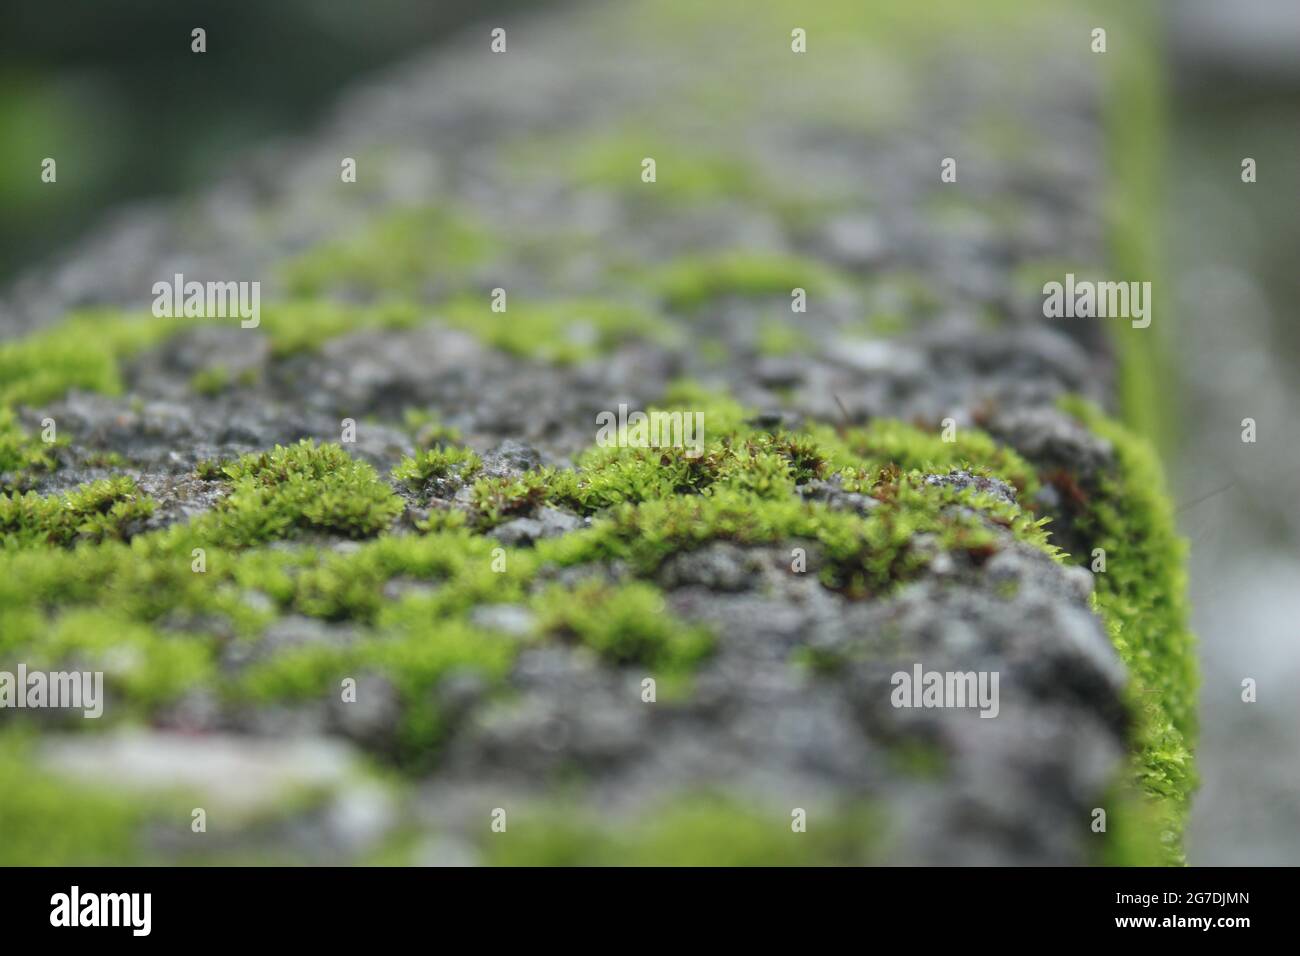 Full HD green algae or lawn Stock Photo